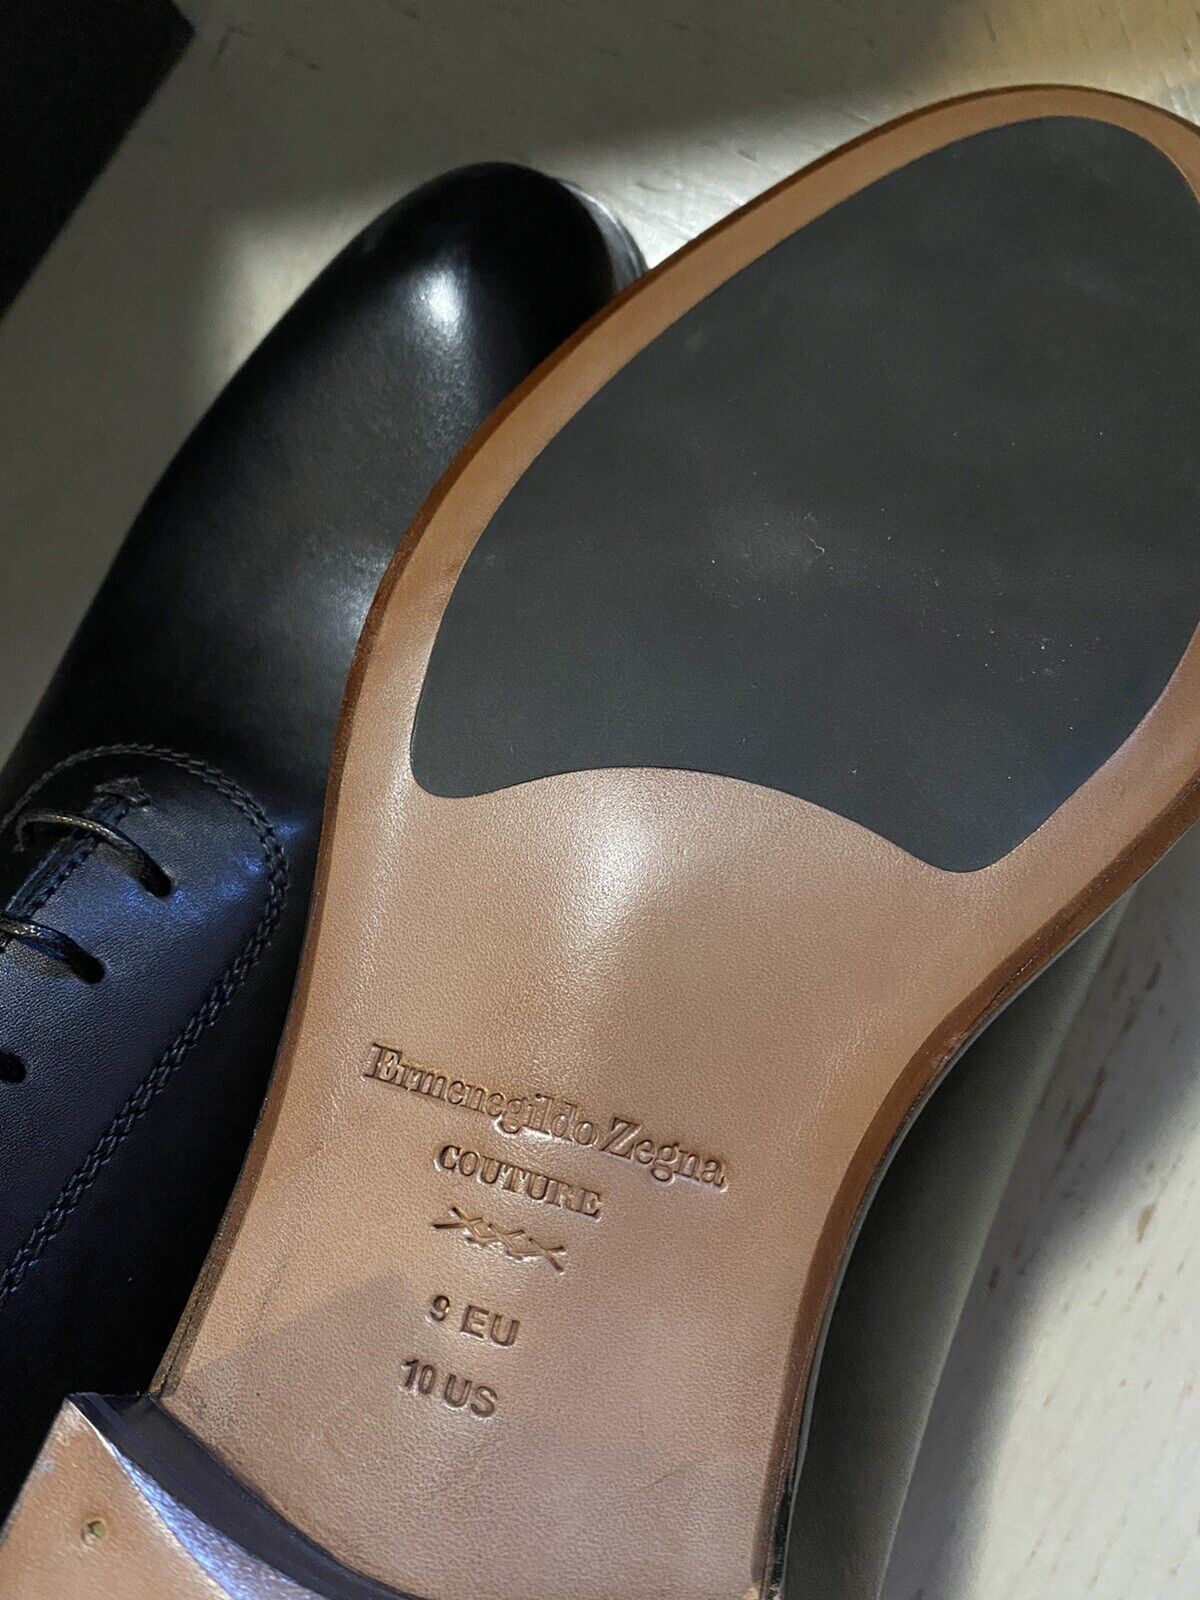 New $950 Ermenegildo Zegna Couture Oxford Leather Shoes Black 10 US Italy